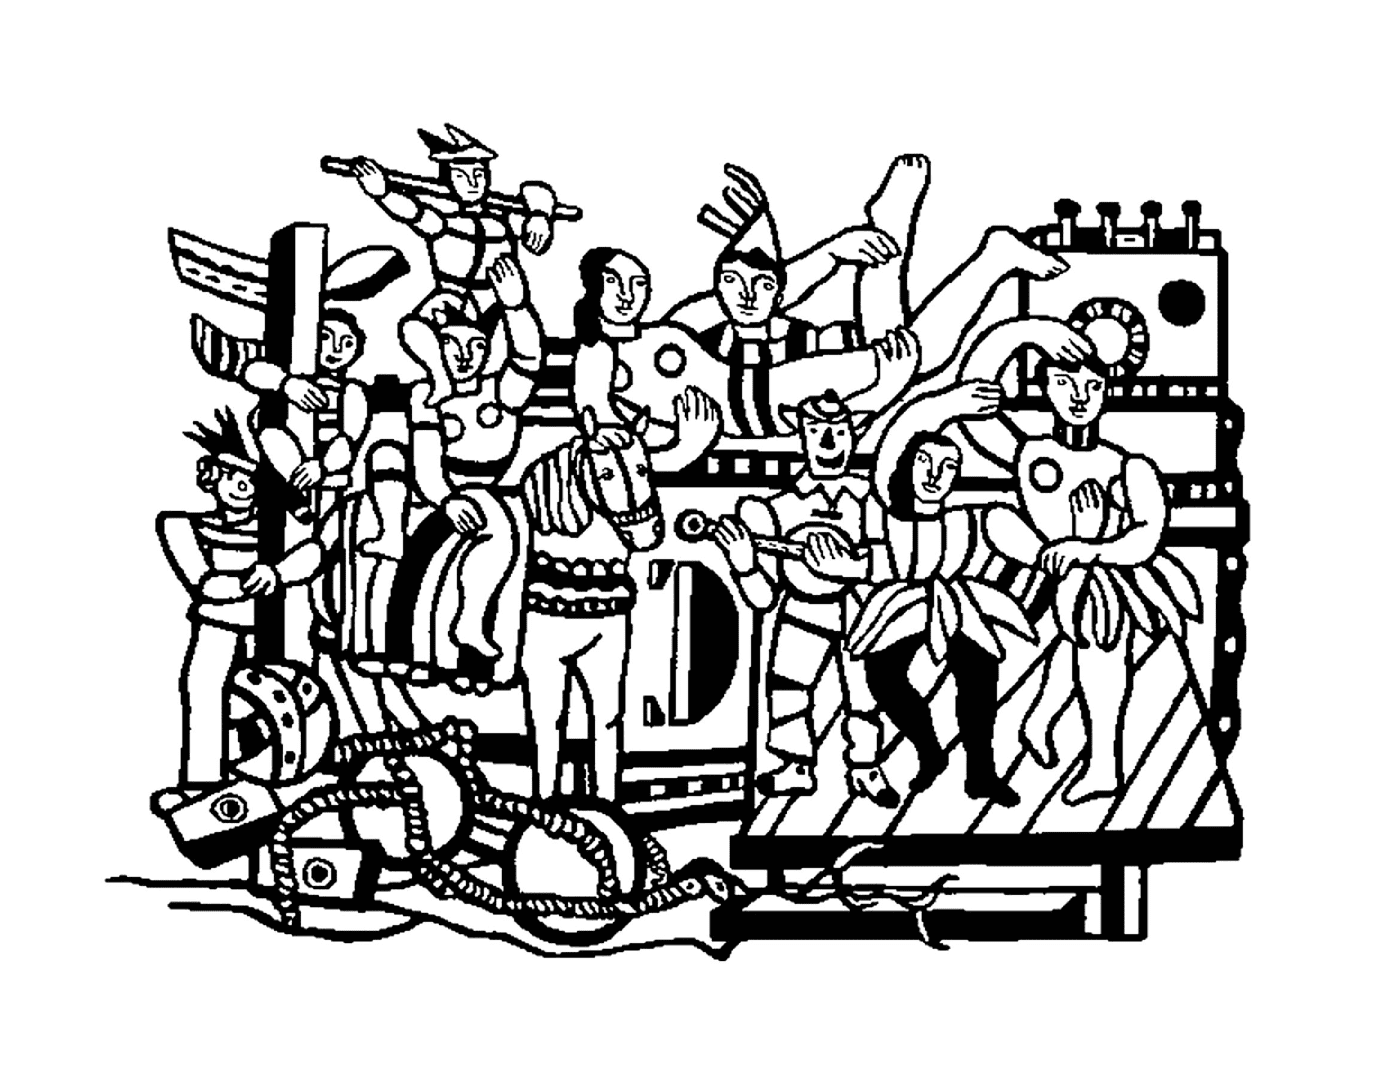  a group of people according to La Grande Parade de Fernand Léger 